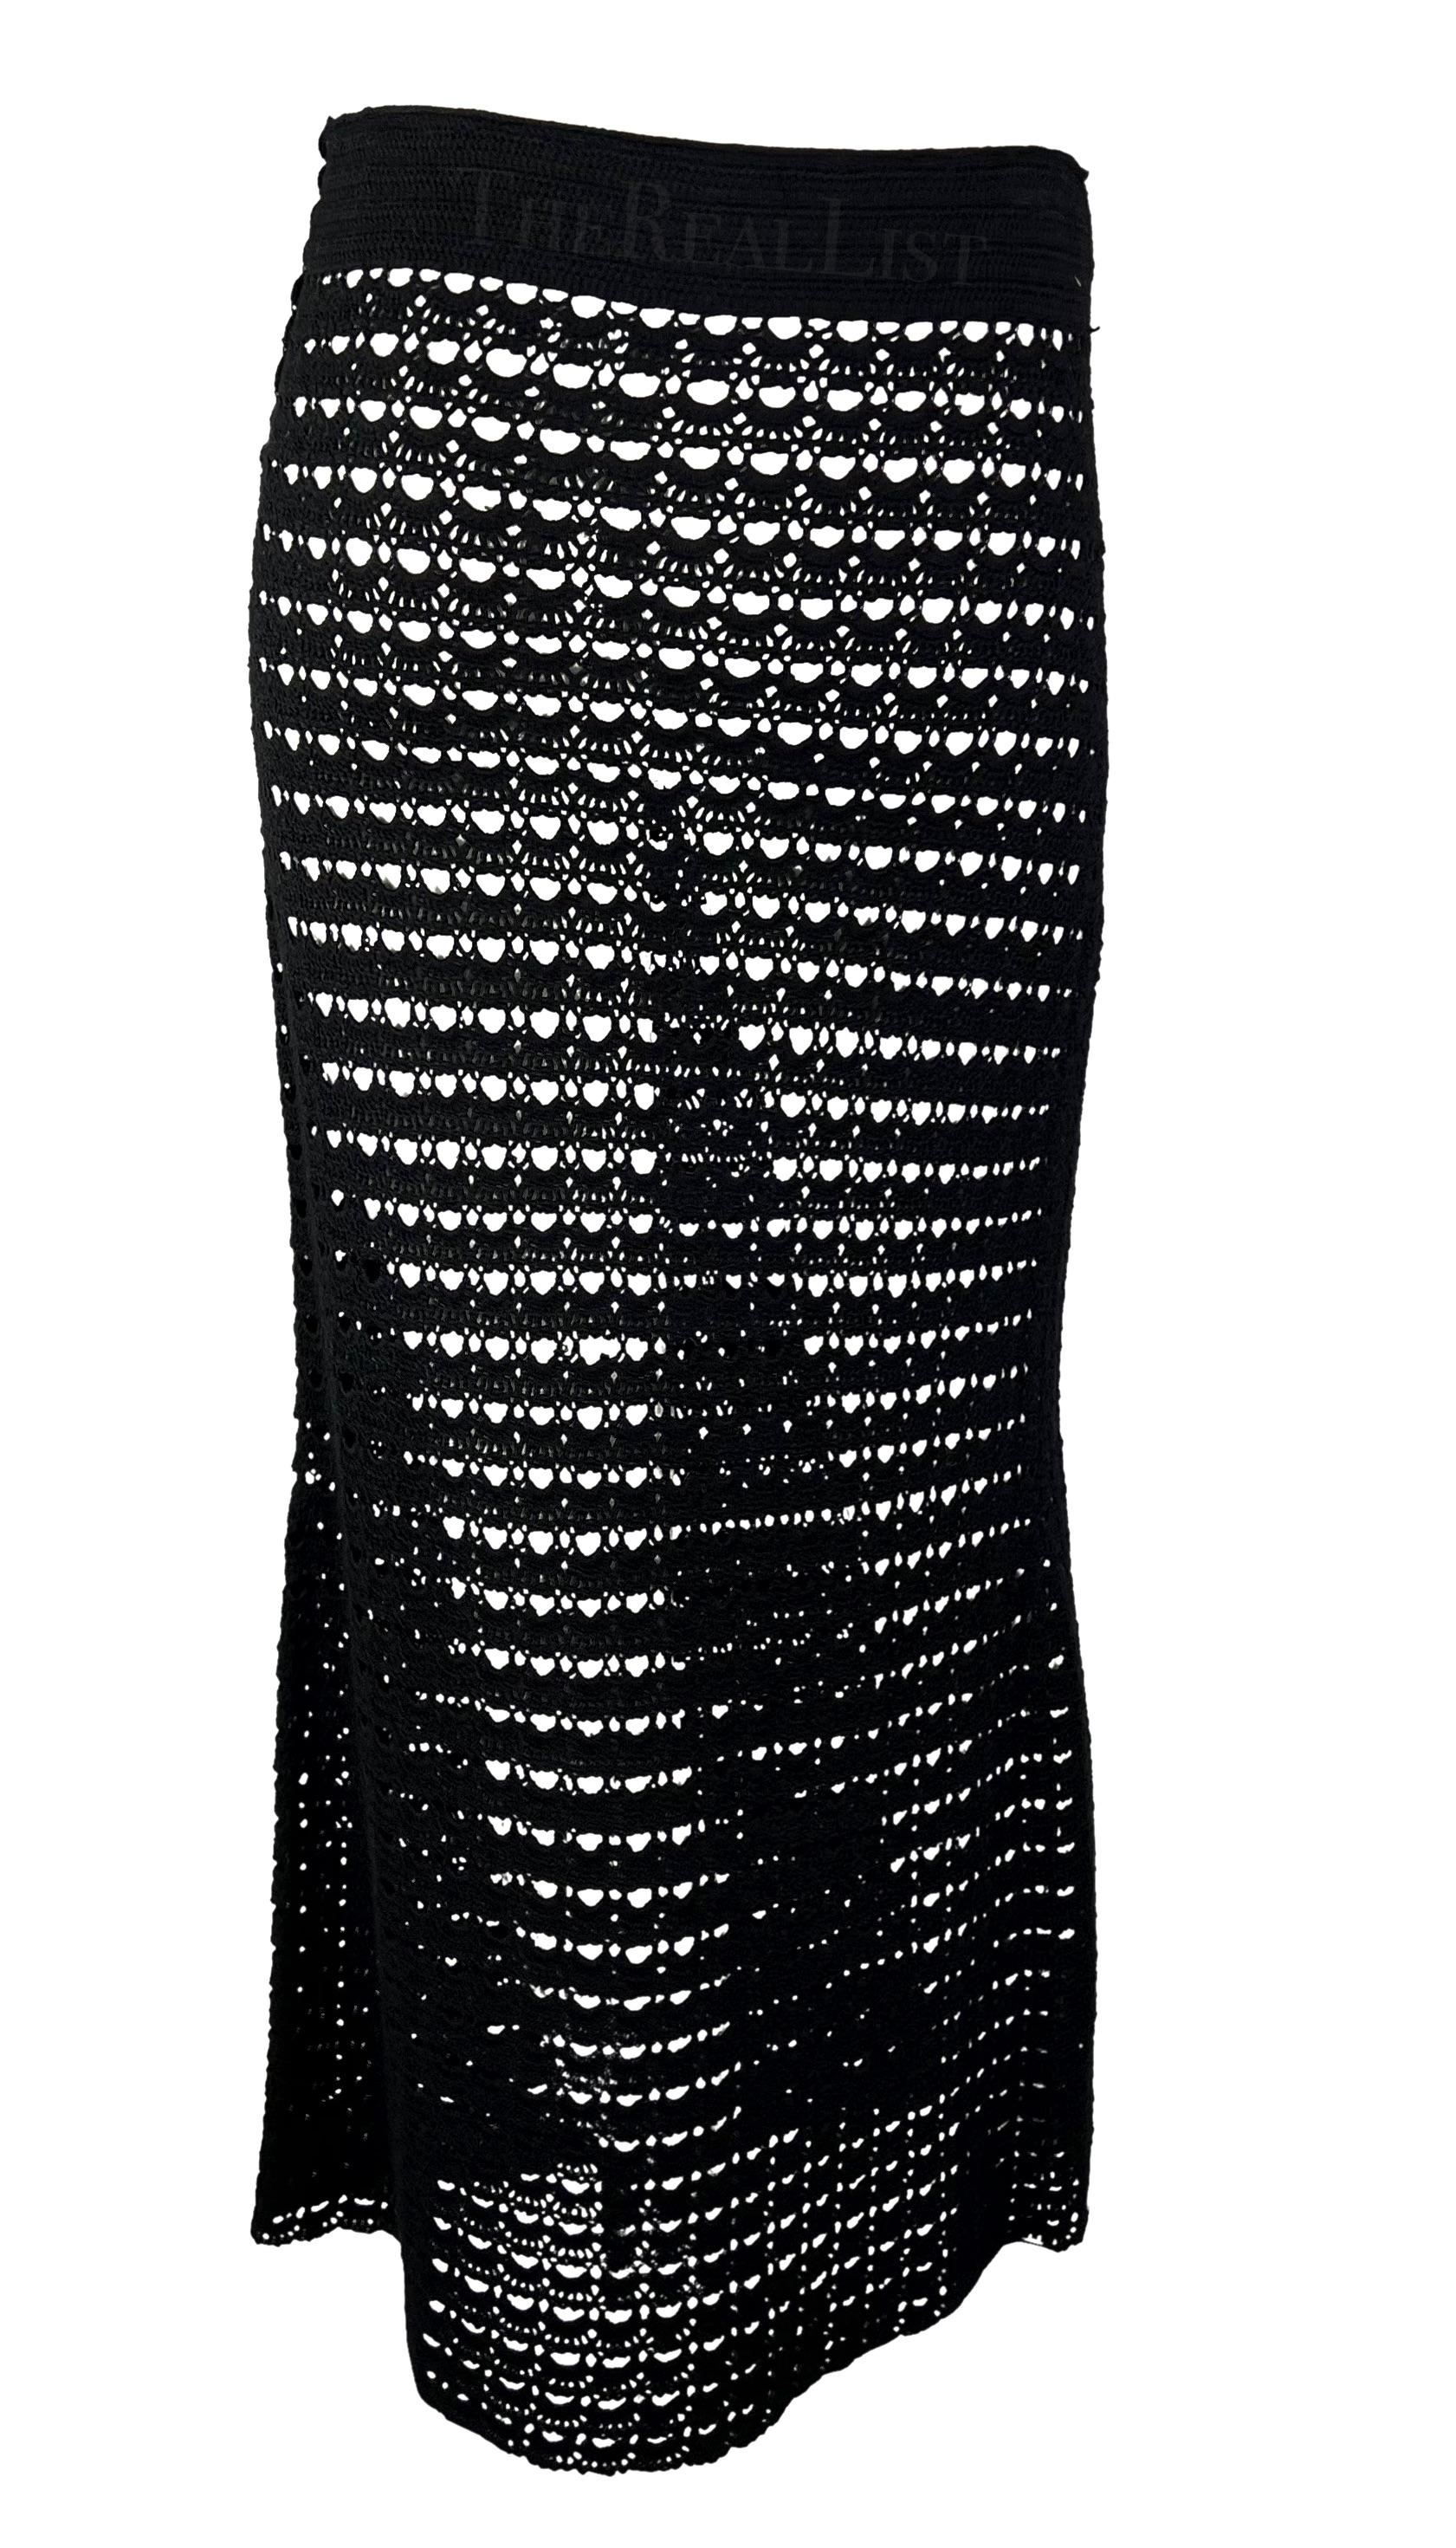 S/S 1997 Dolce & Gabbana Black Knit Crochet Maxi Skirt Wrap Top Skirt Set For Sale 6